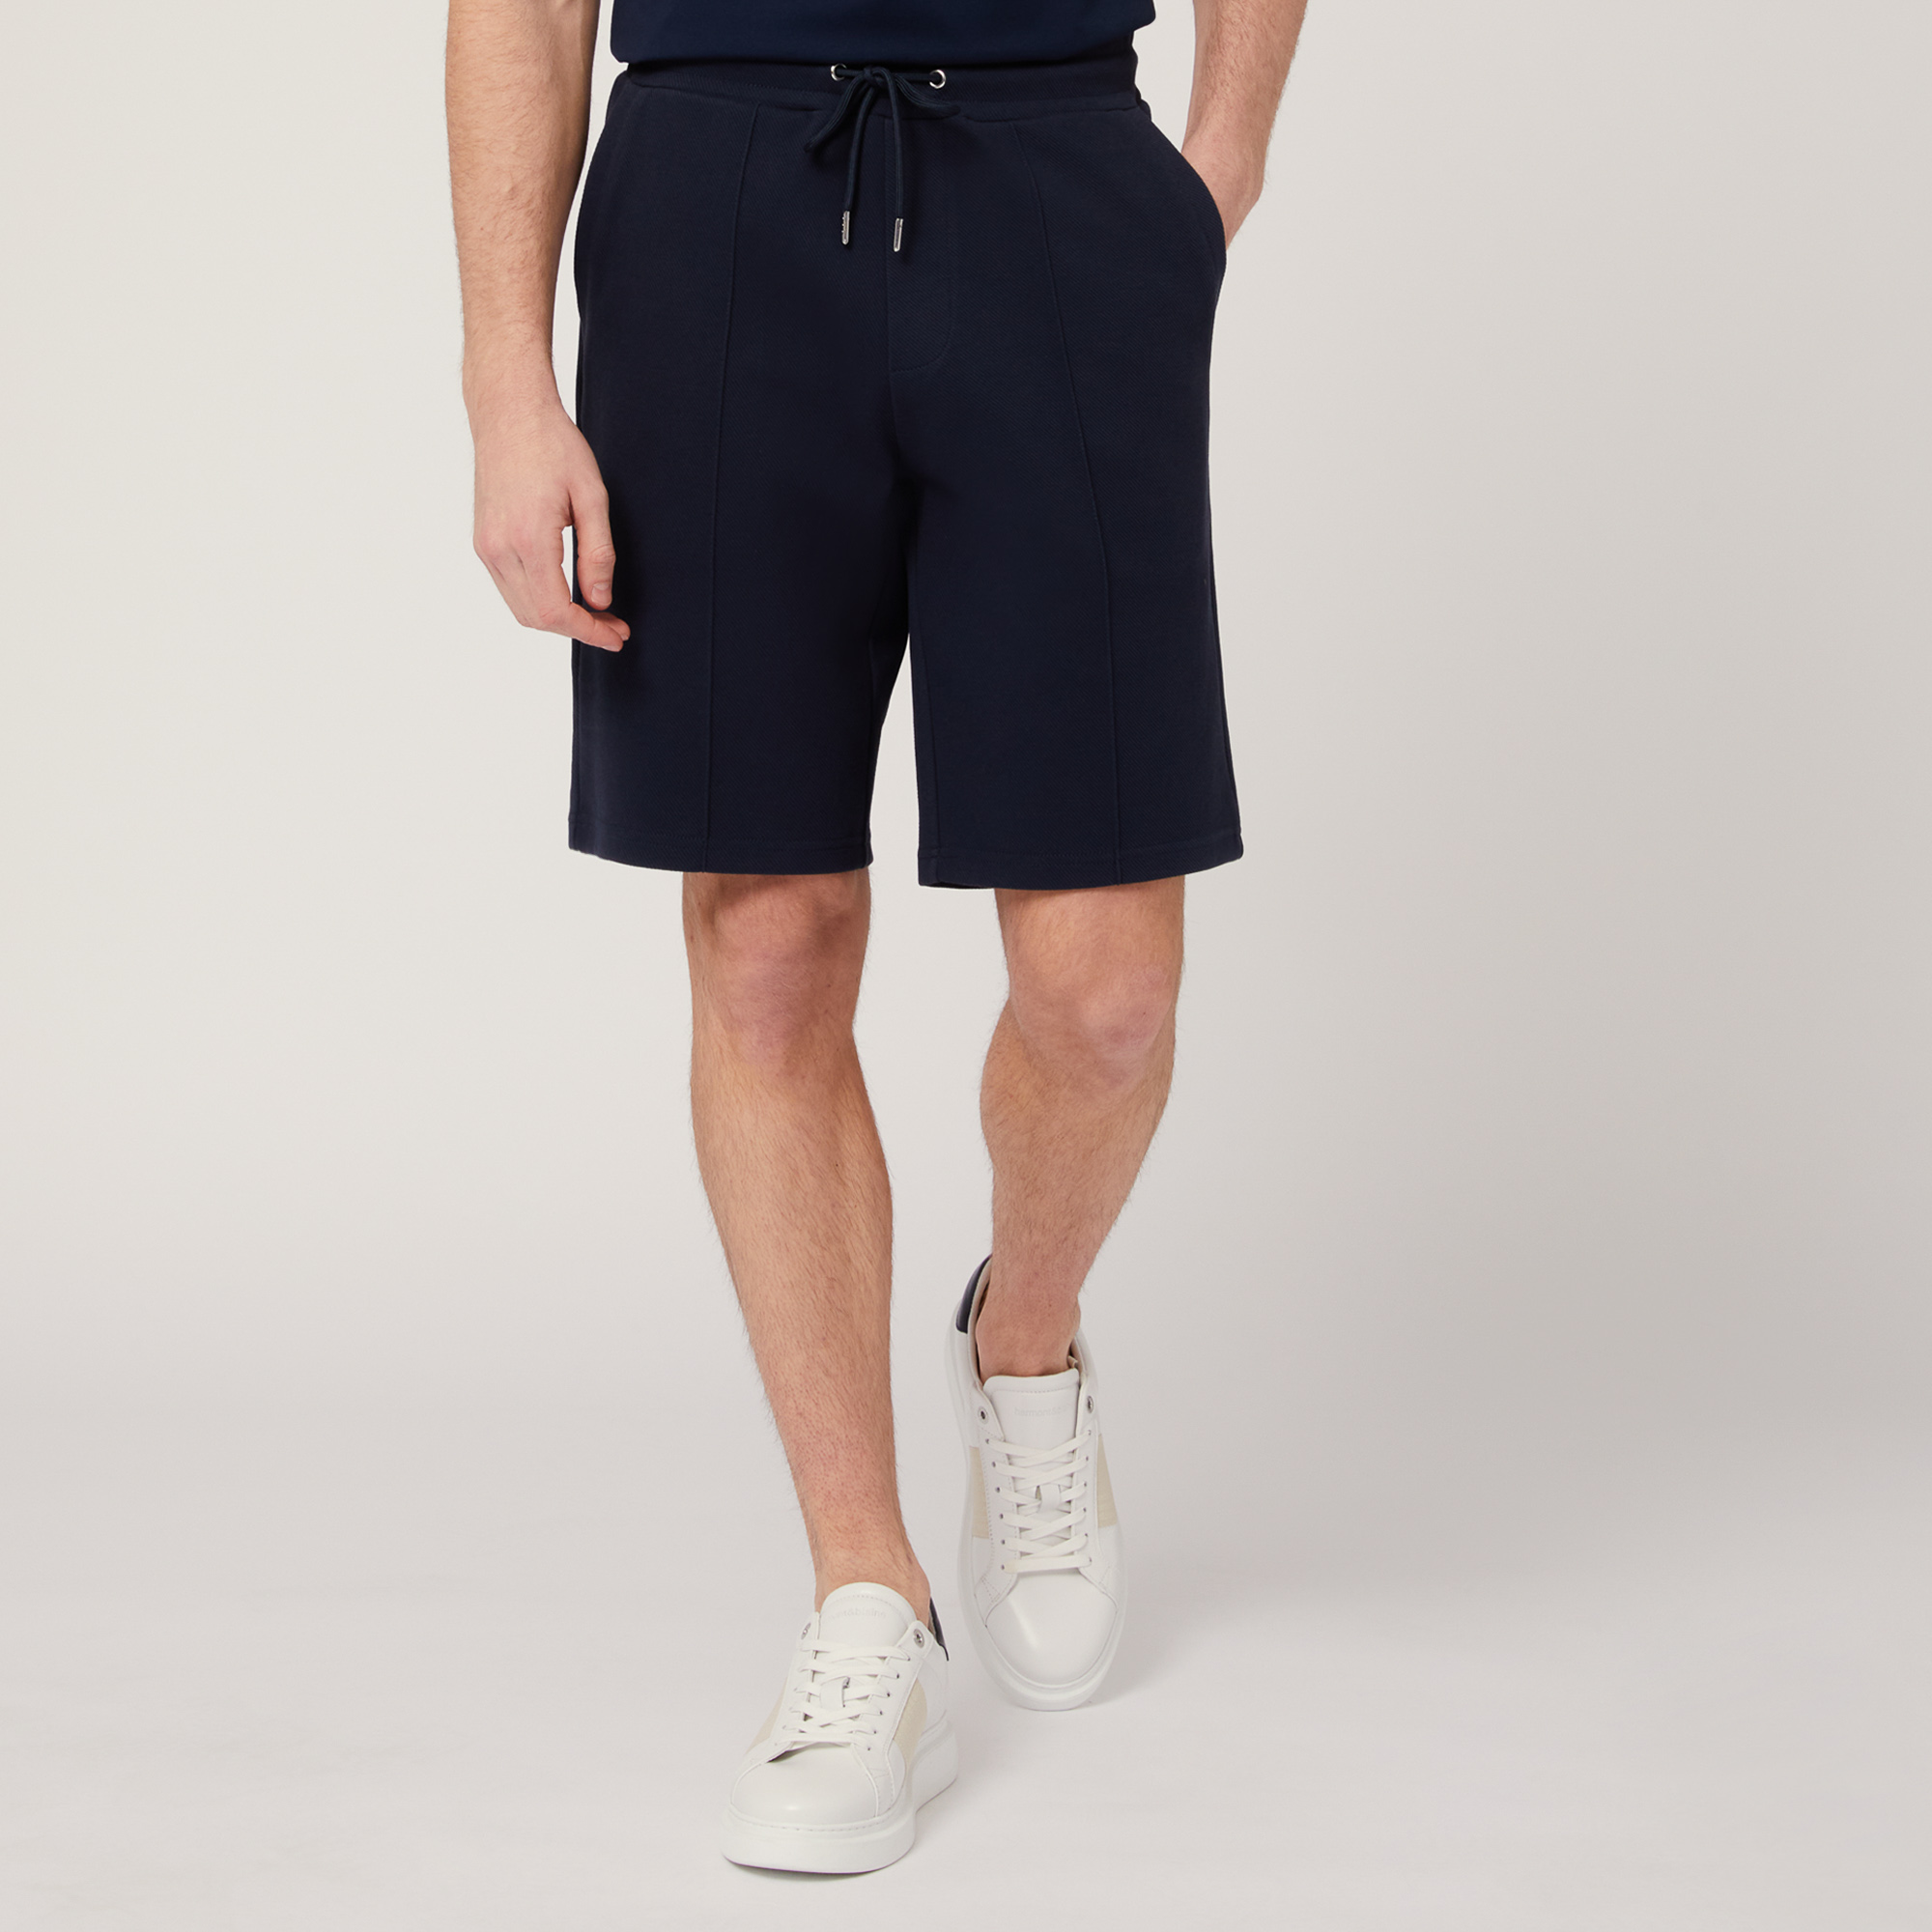 Pantalón corto de algodón elástico con bolsillo trasero, Azul, large image number 0